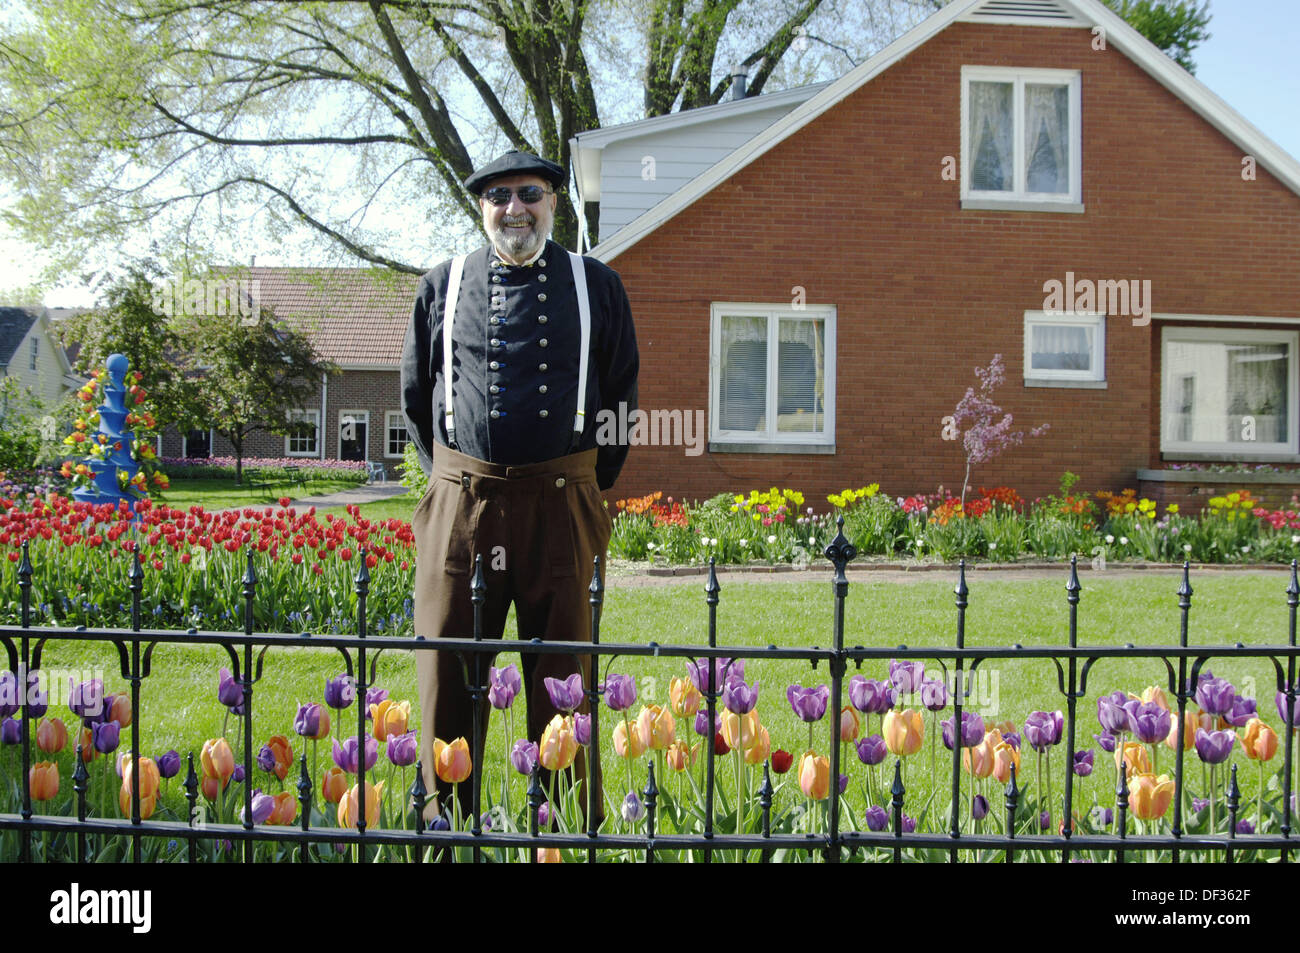 A dutch gentleman in period dress at the Historical village in Pella, Iowa, USA. Stock Photo